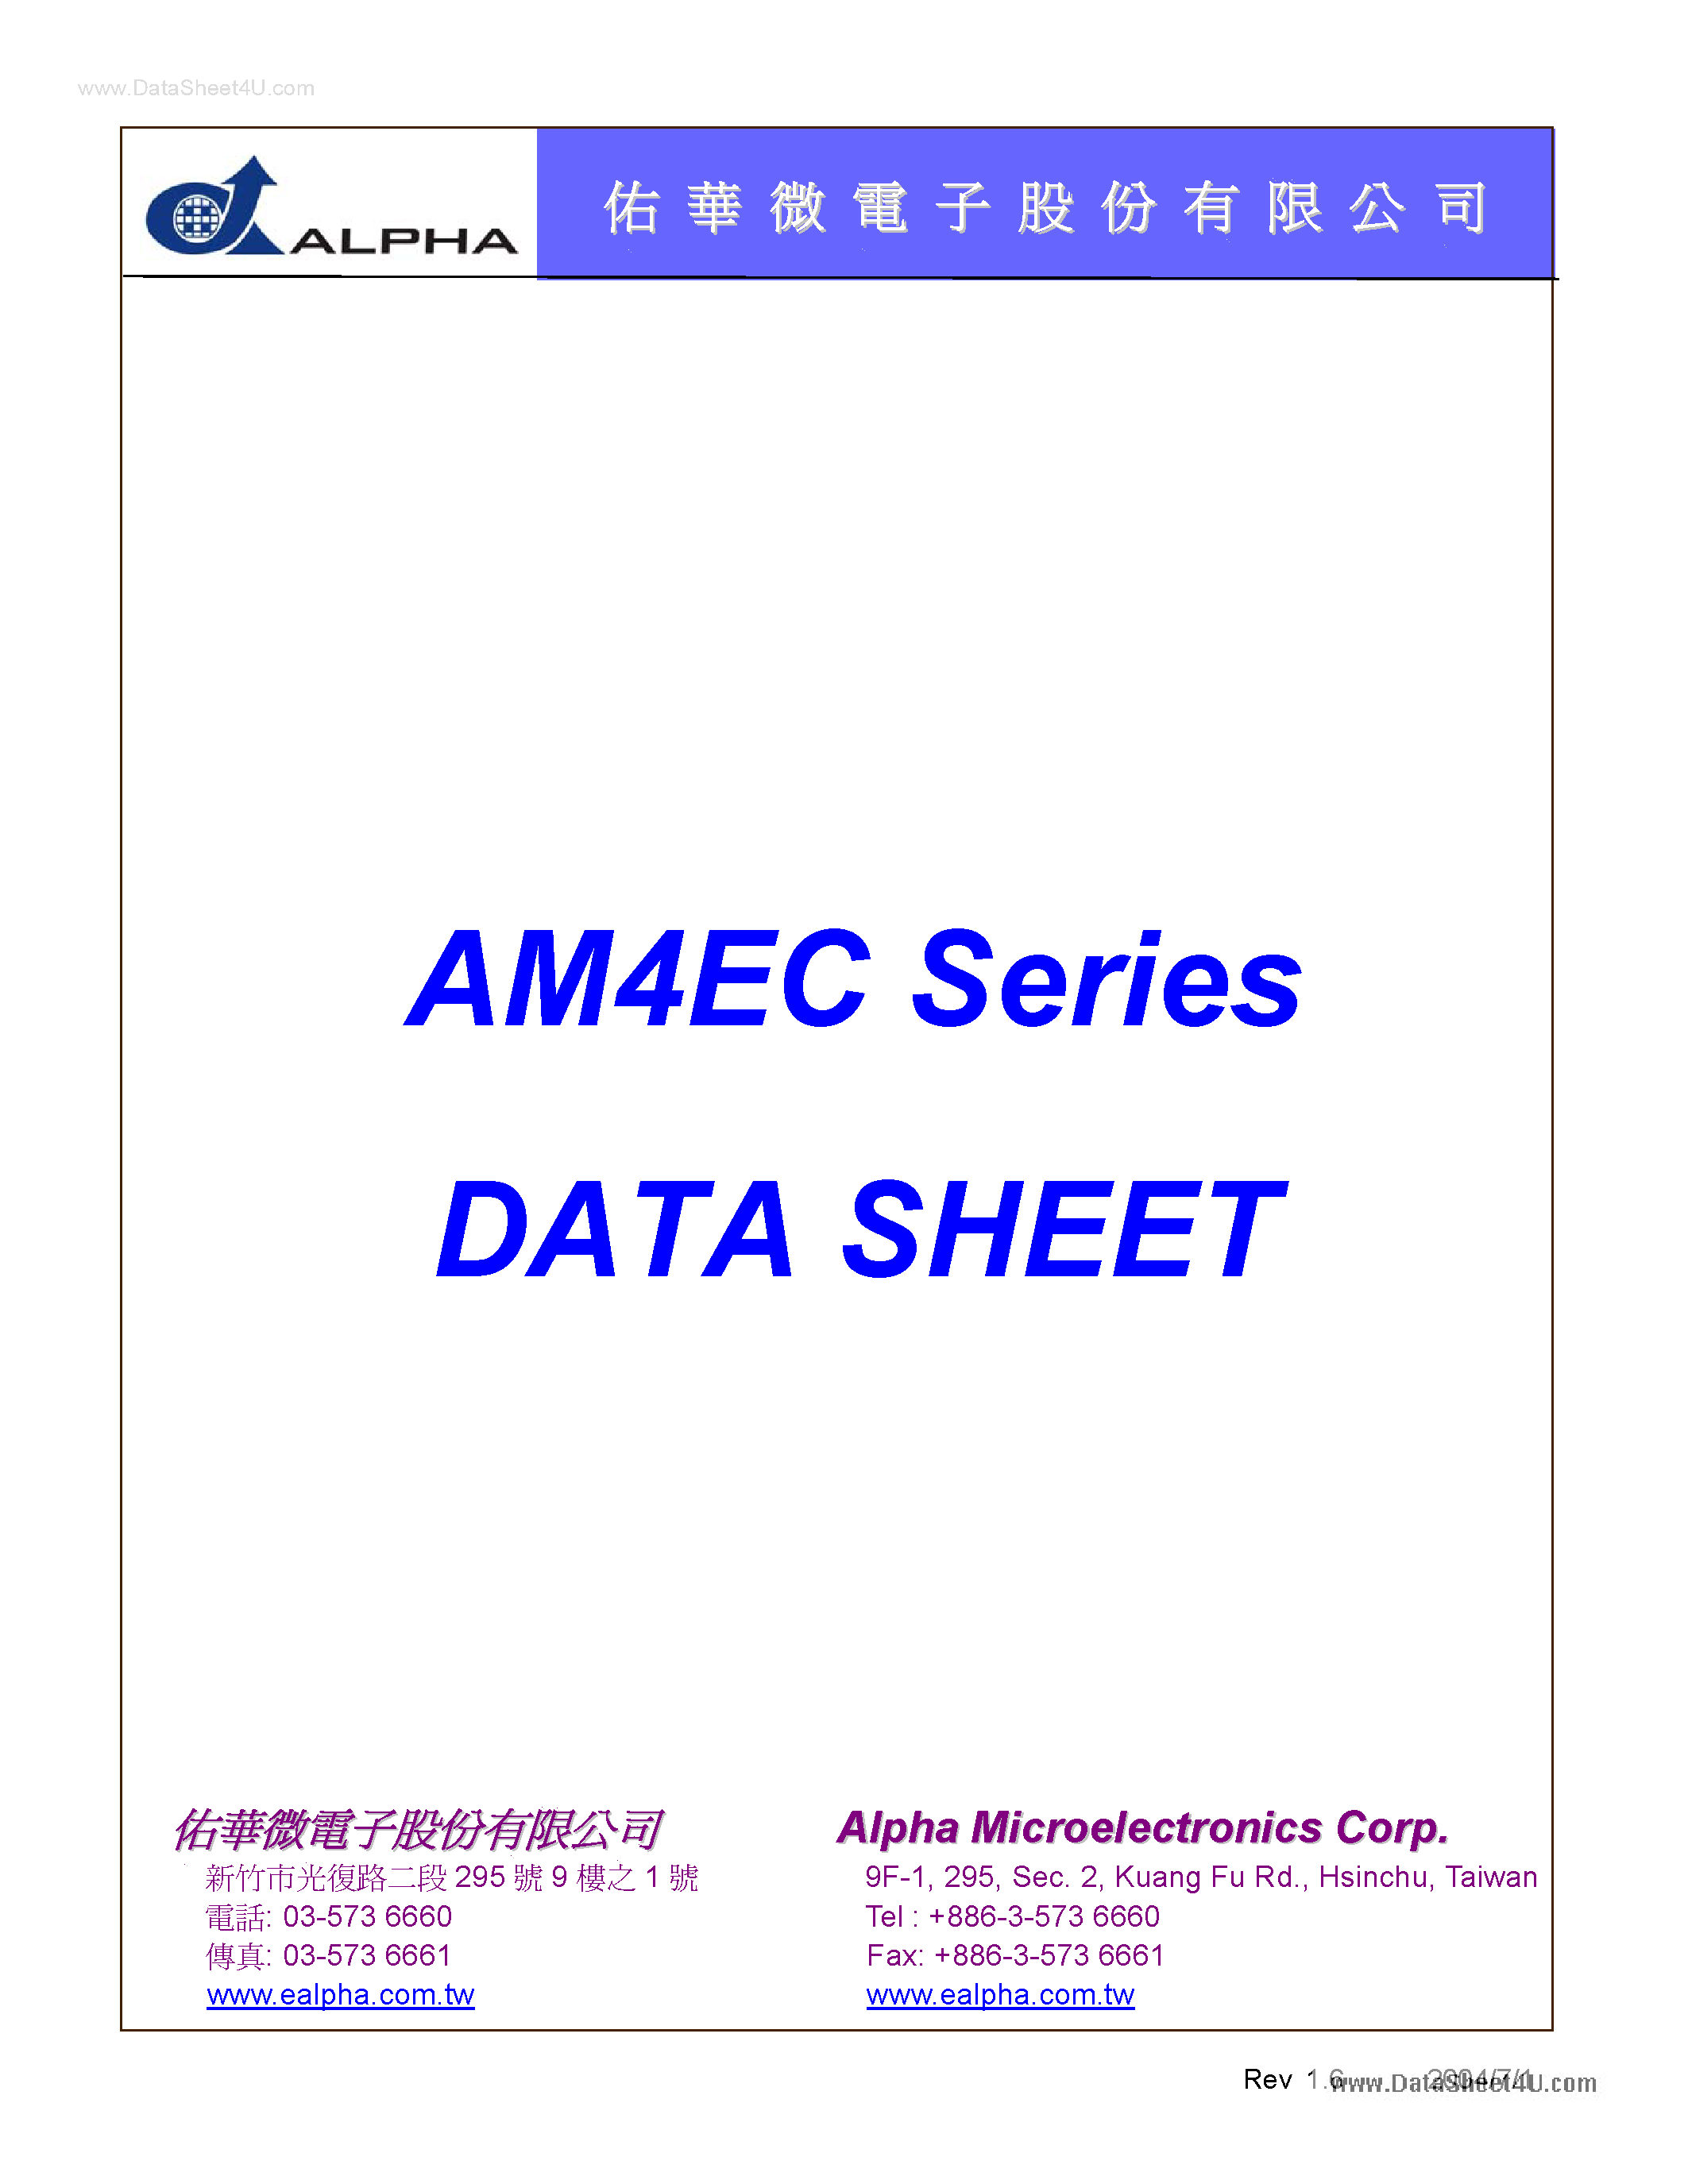 Даташит AM4EC - AM4EC Series страница 1